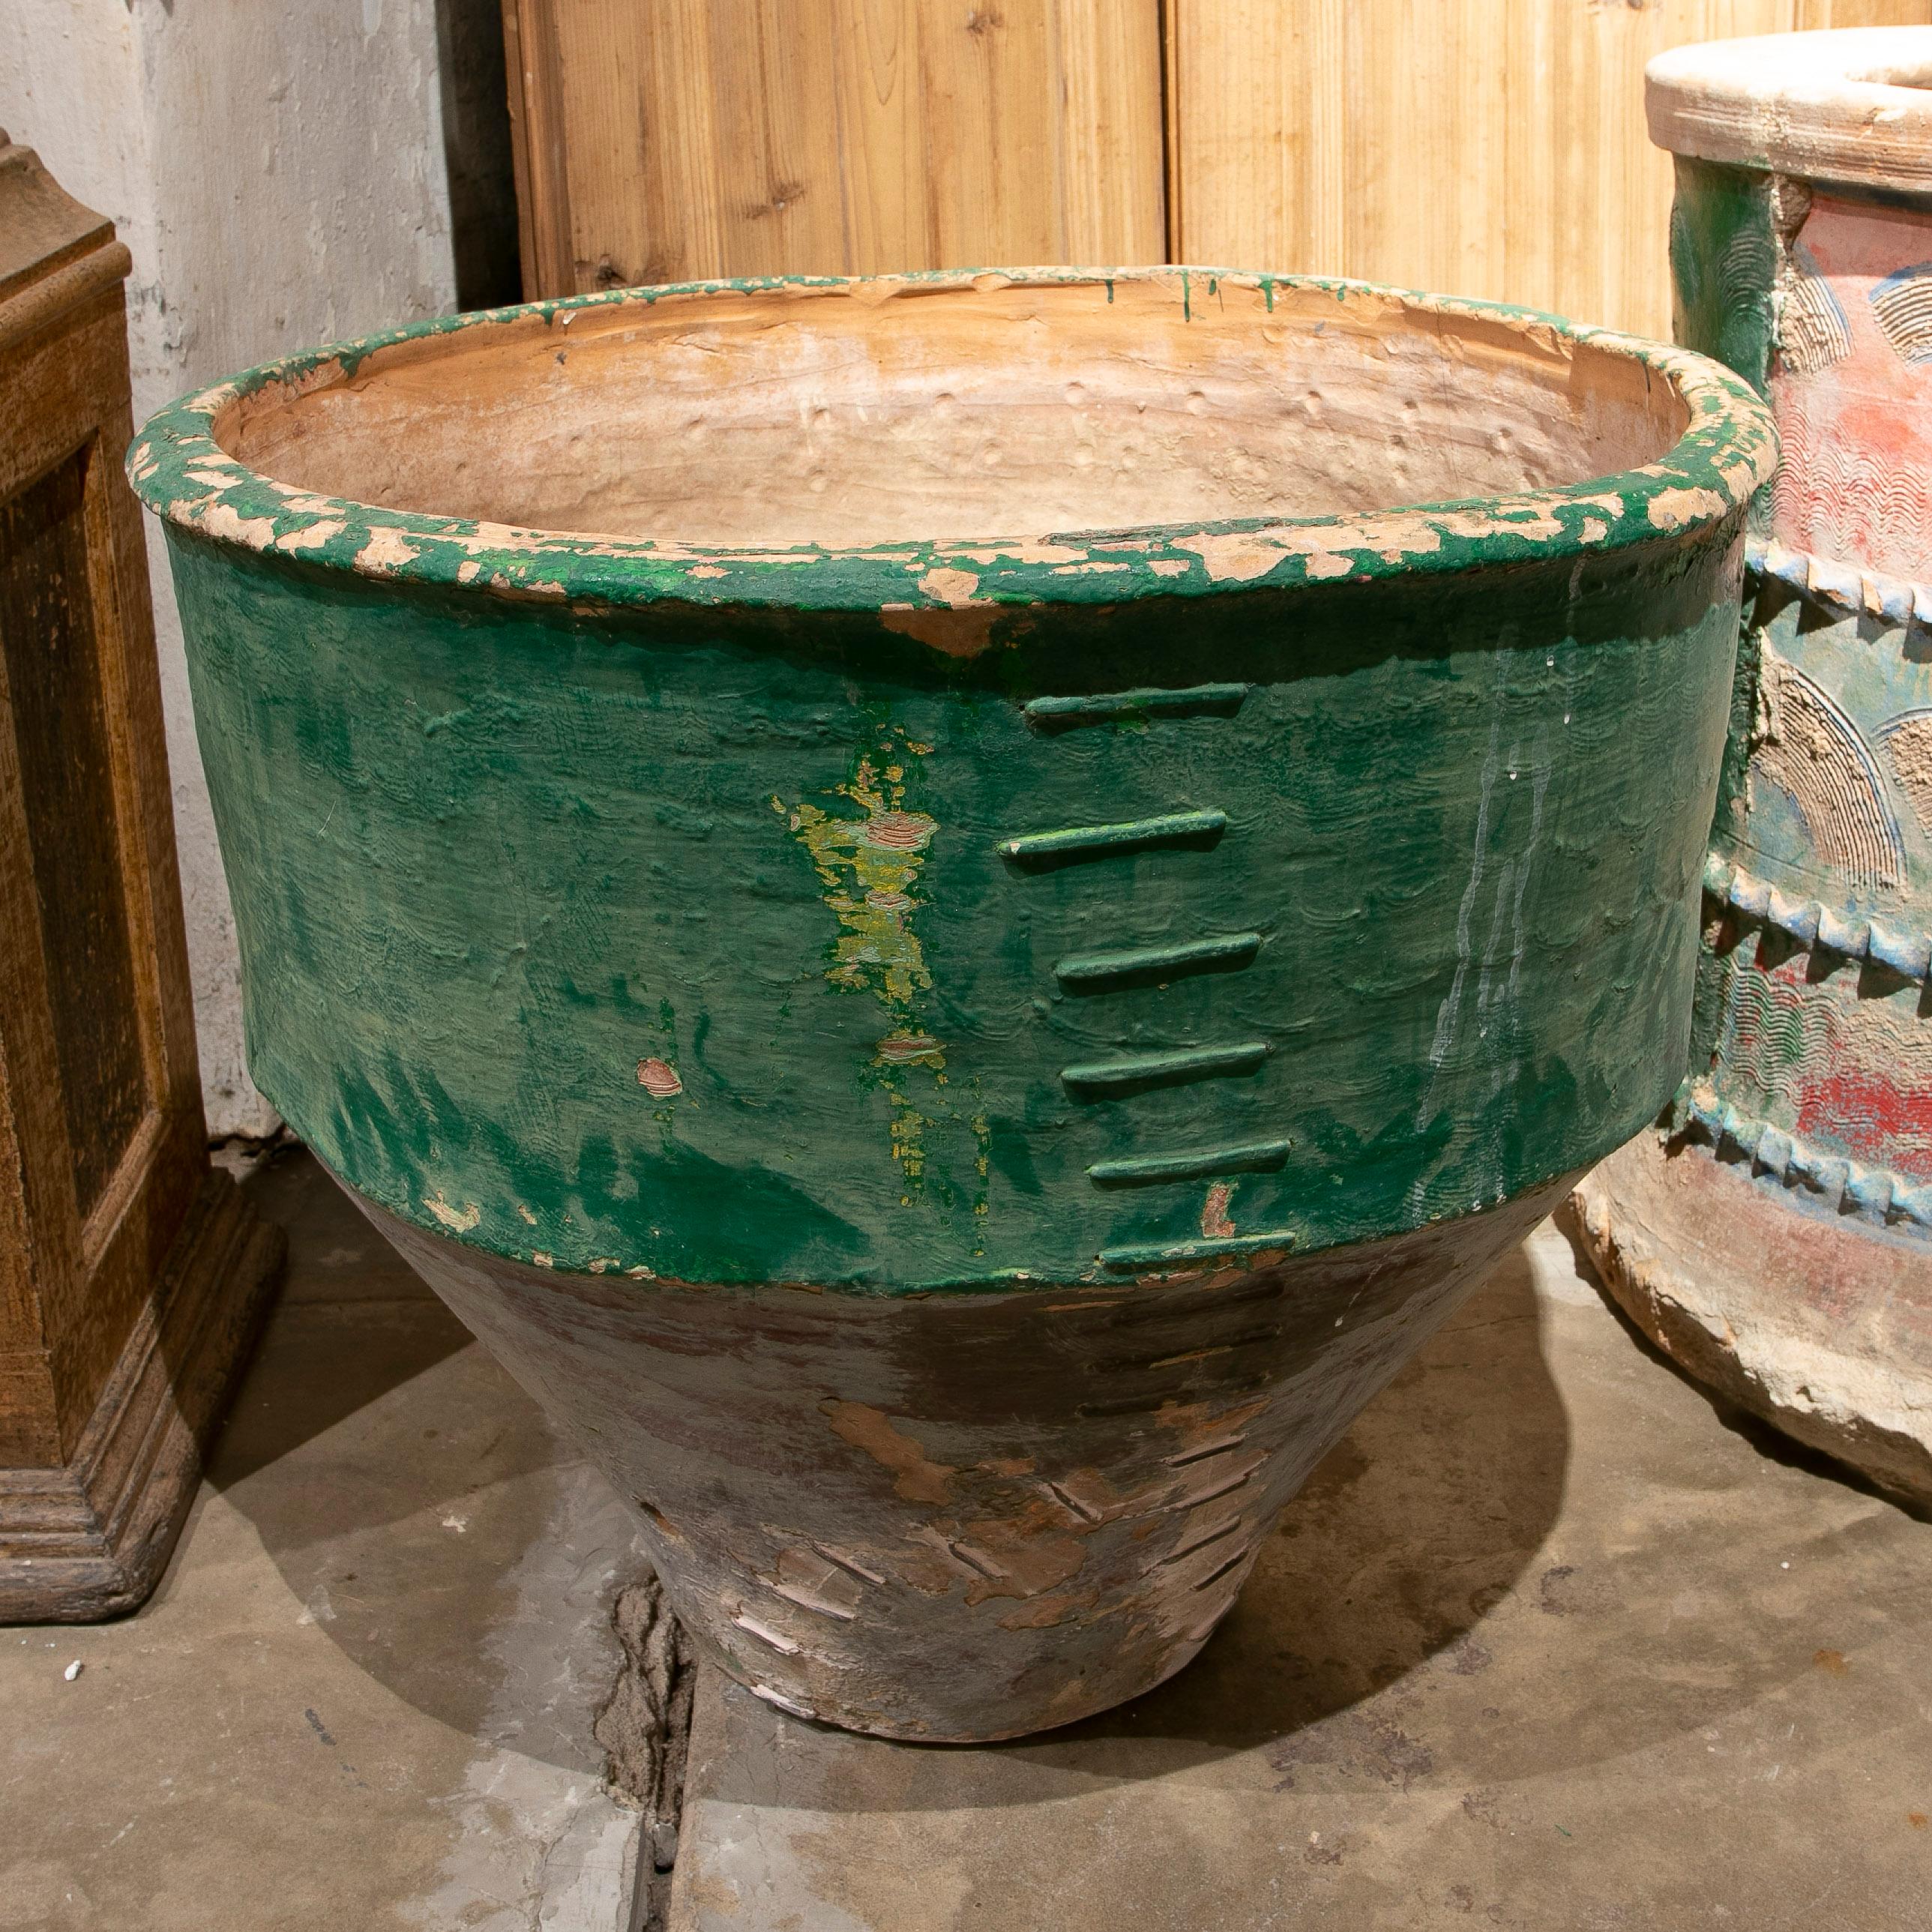 Late 19th century Spanish green terracotta vase urn restored with staples.